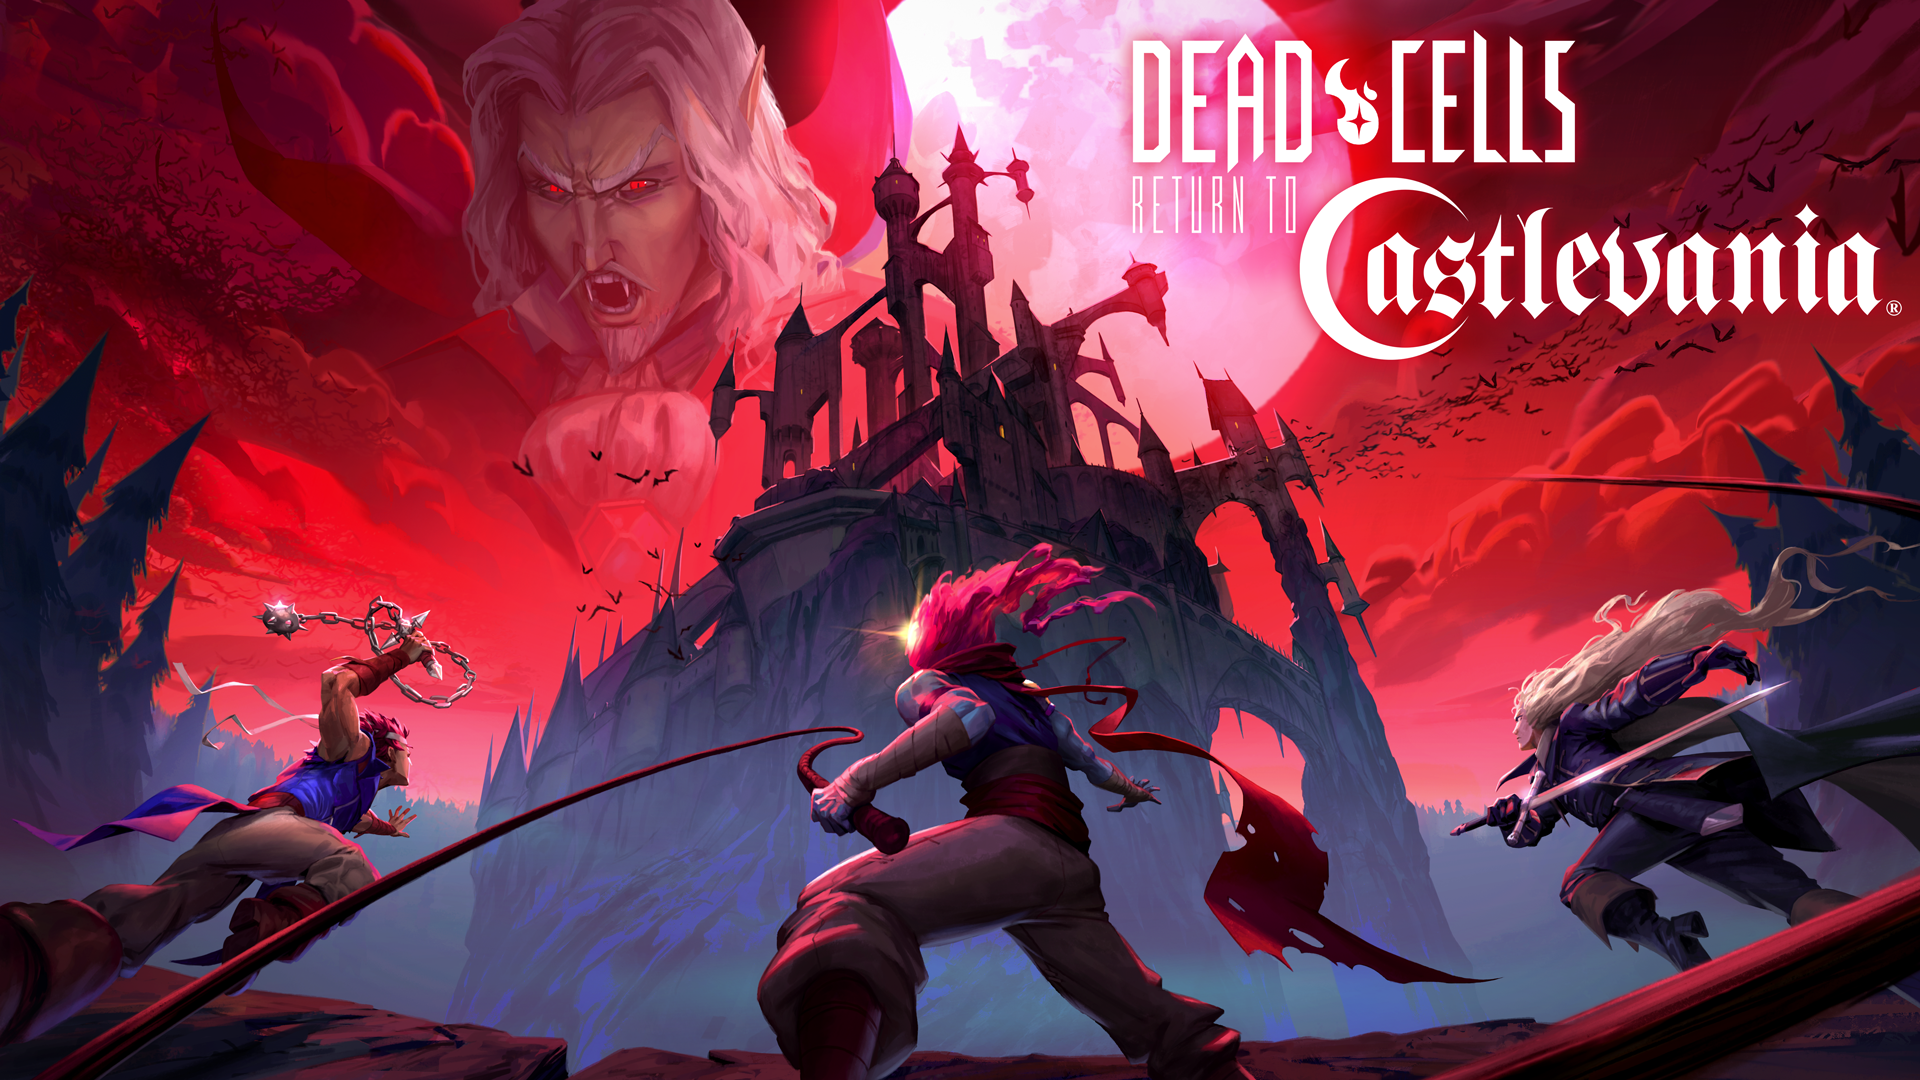 Dead Cells: Return to Castlevania DLC Announced